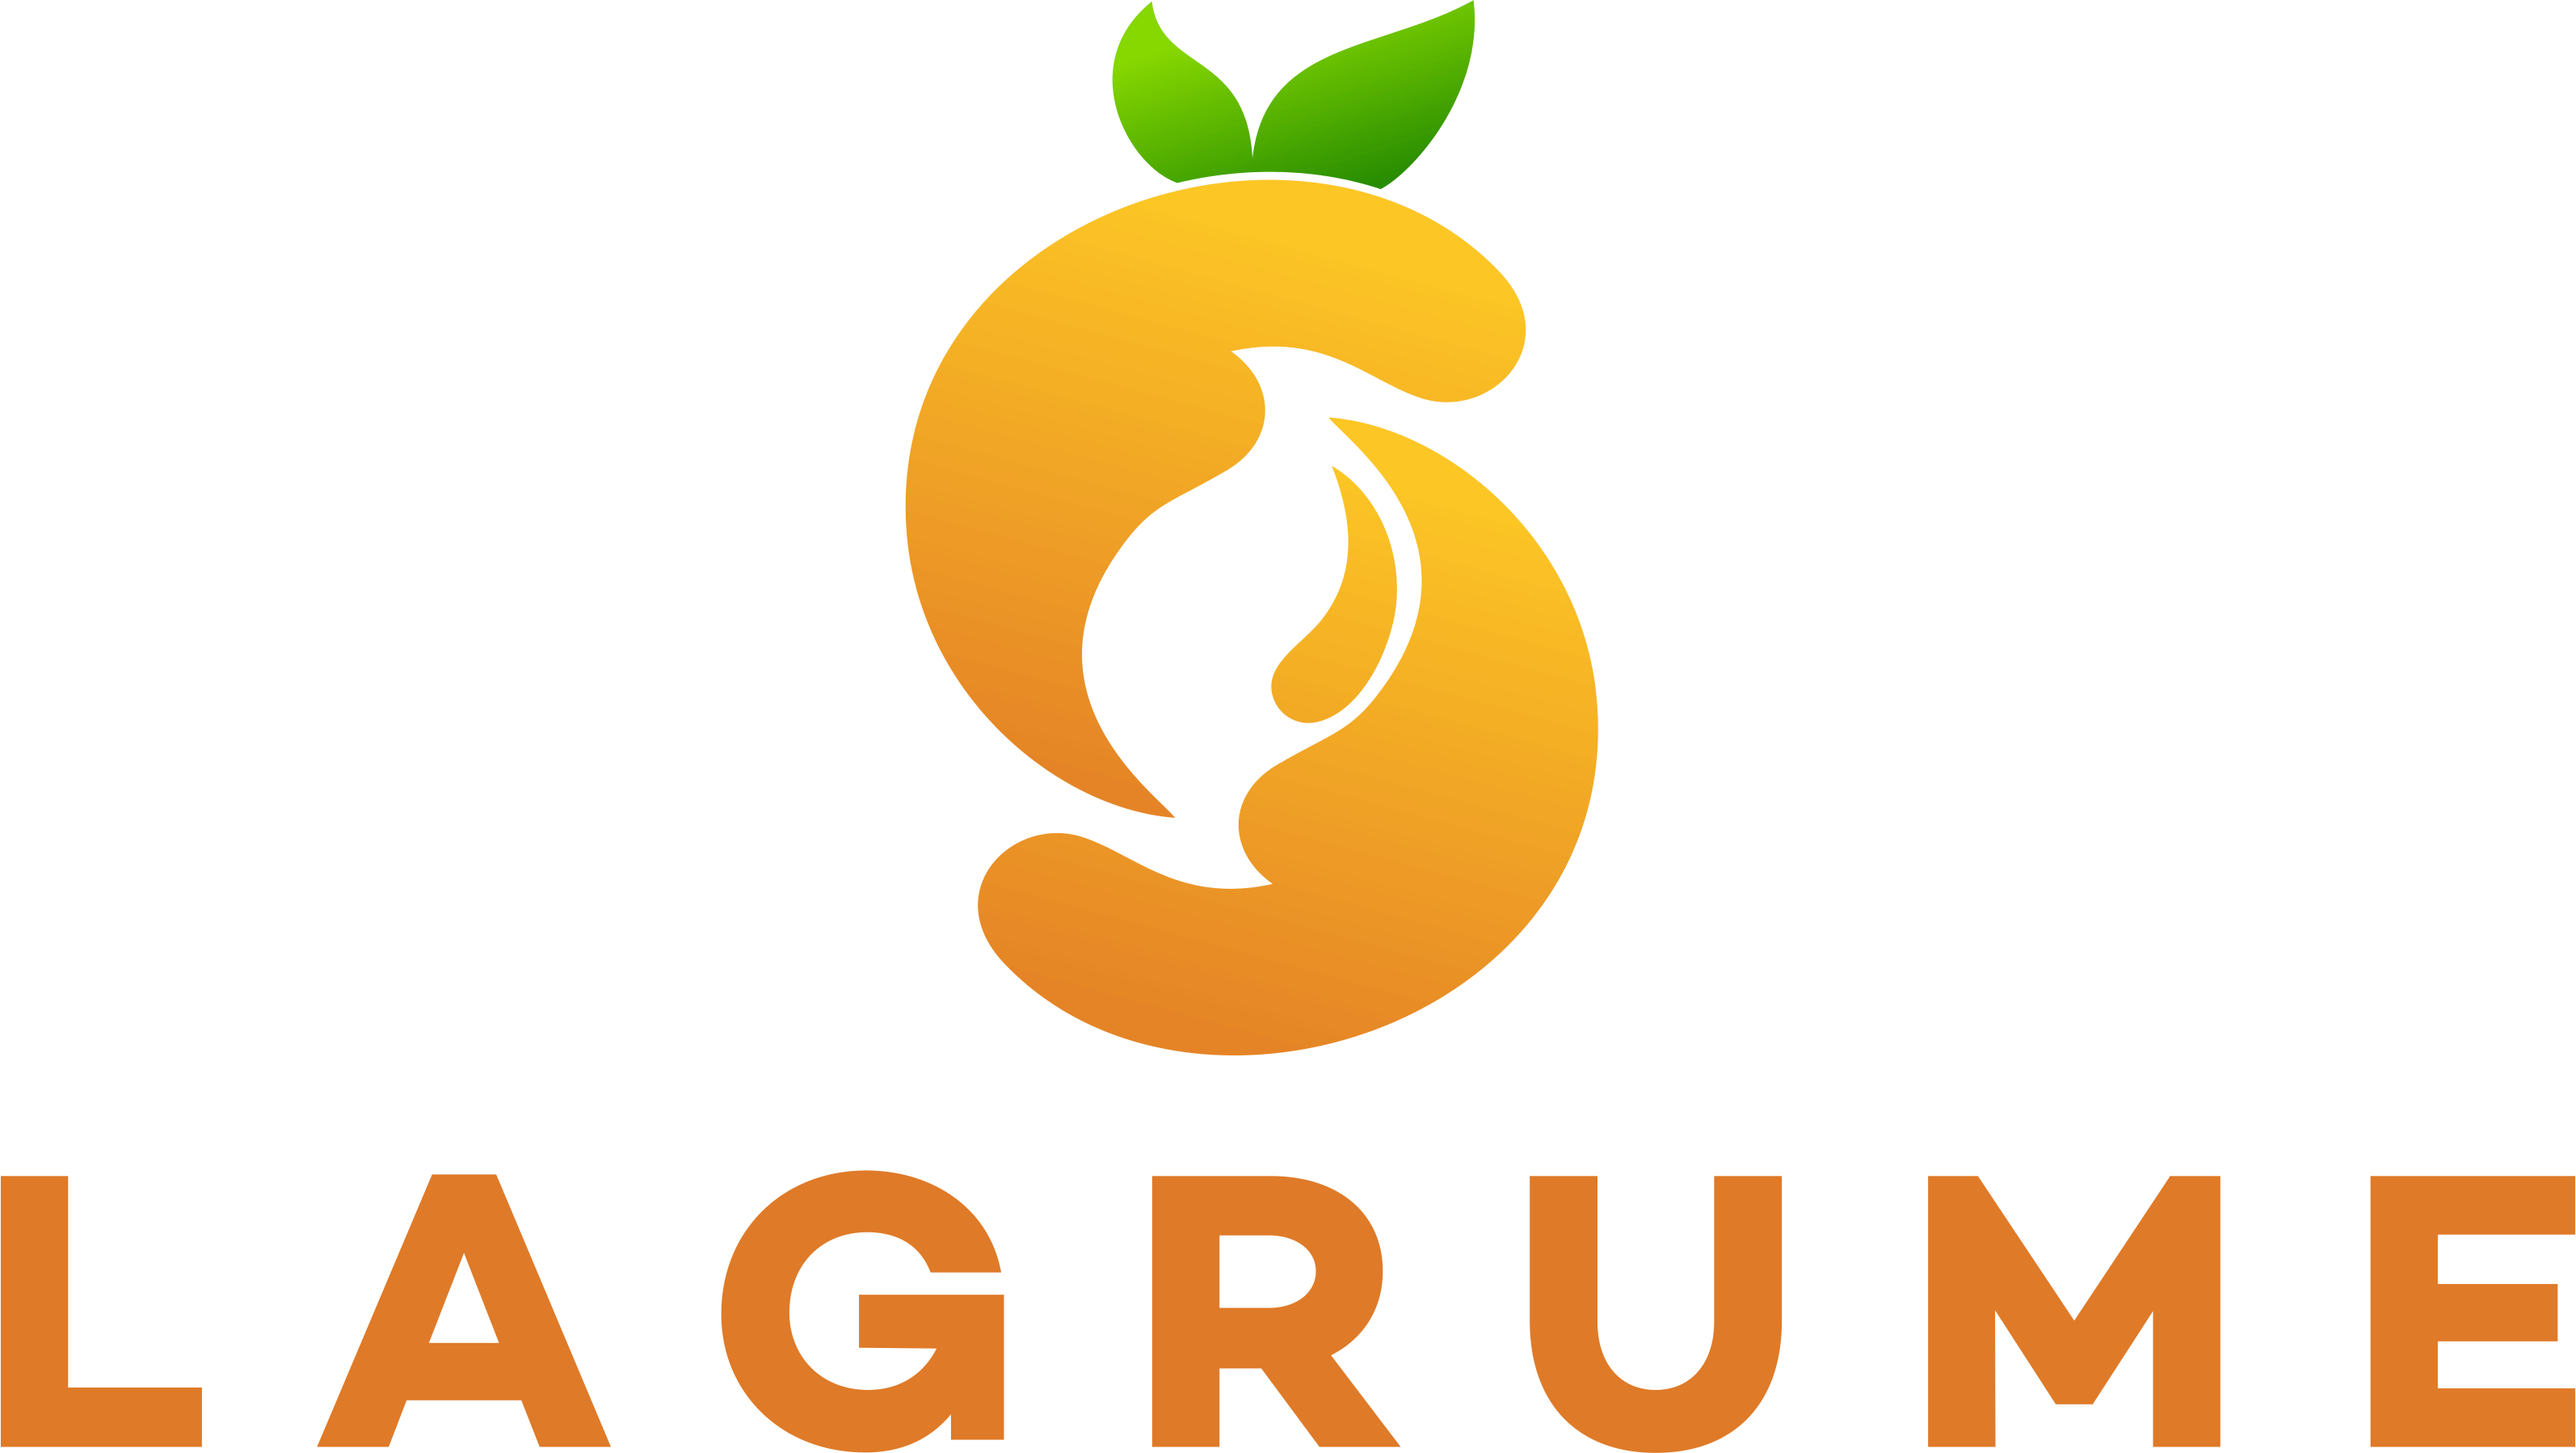 lagrume logo